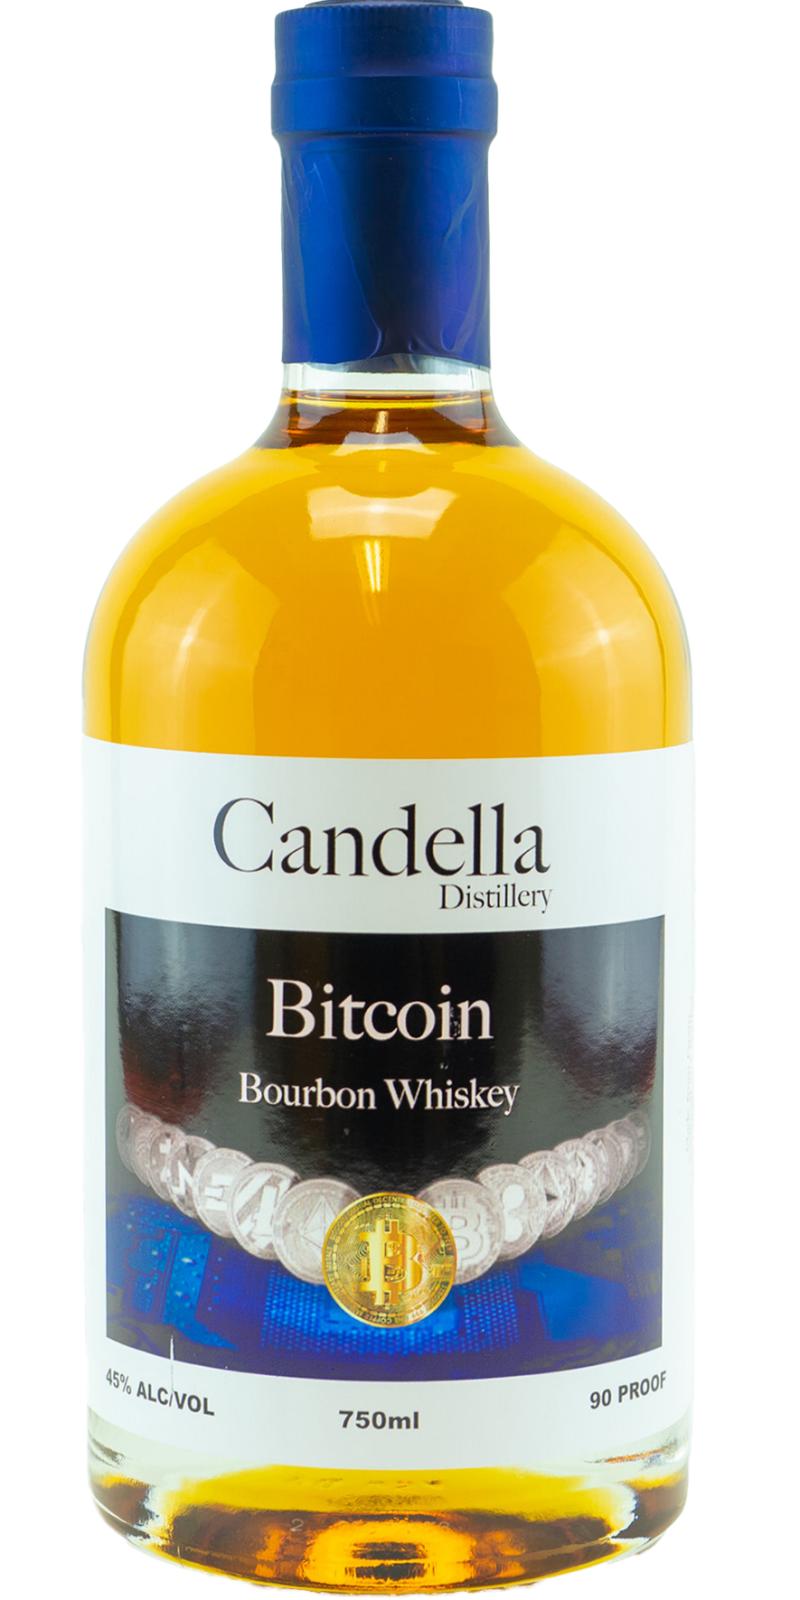 Candella Bitcoin Bourbon Whiskey